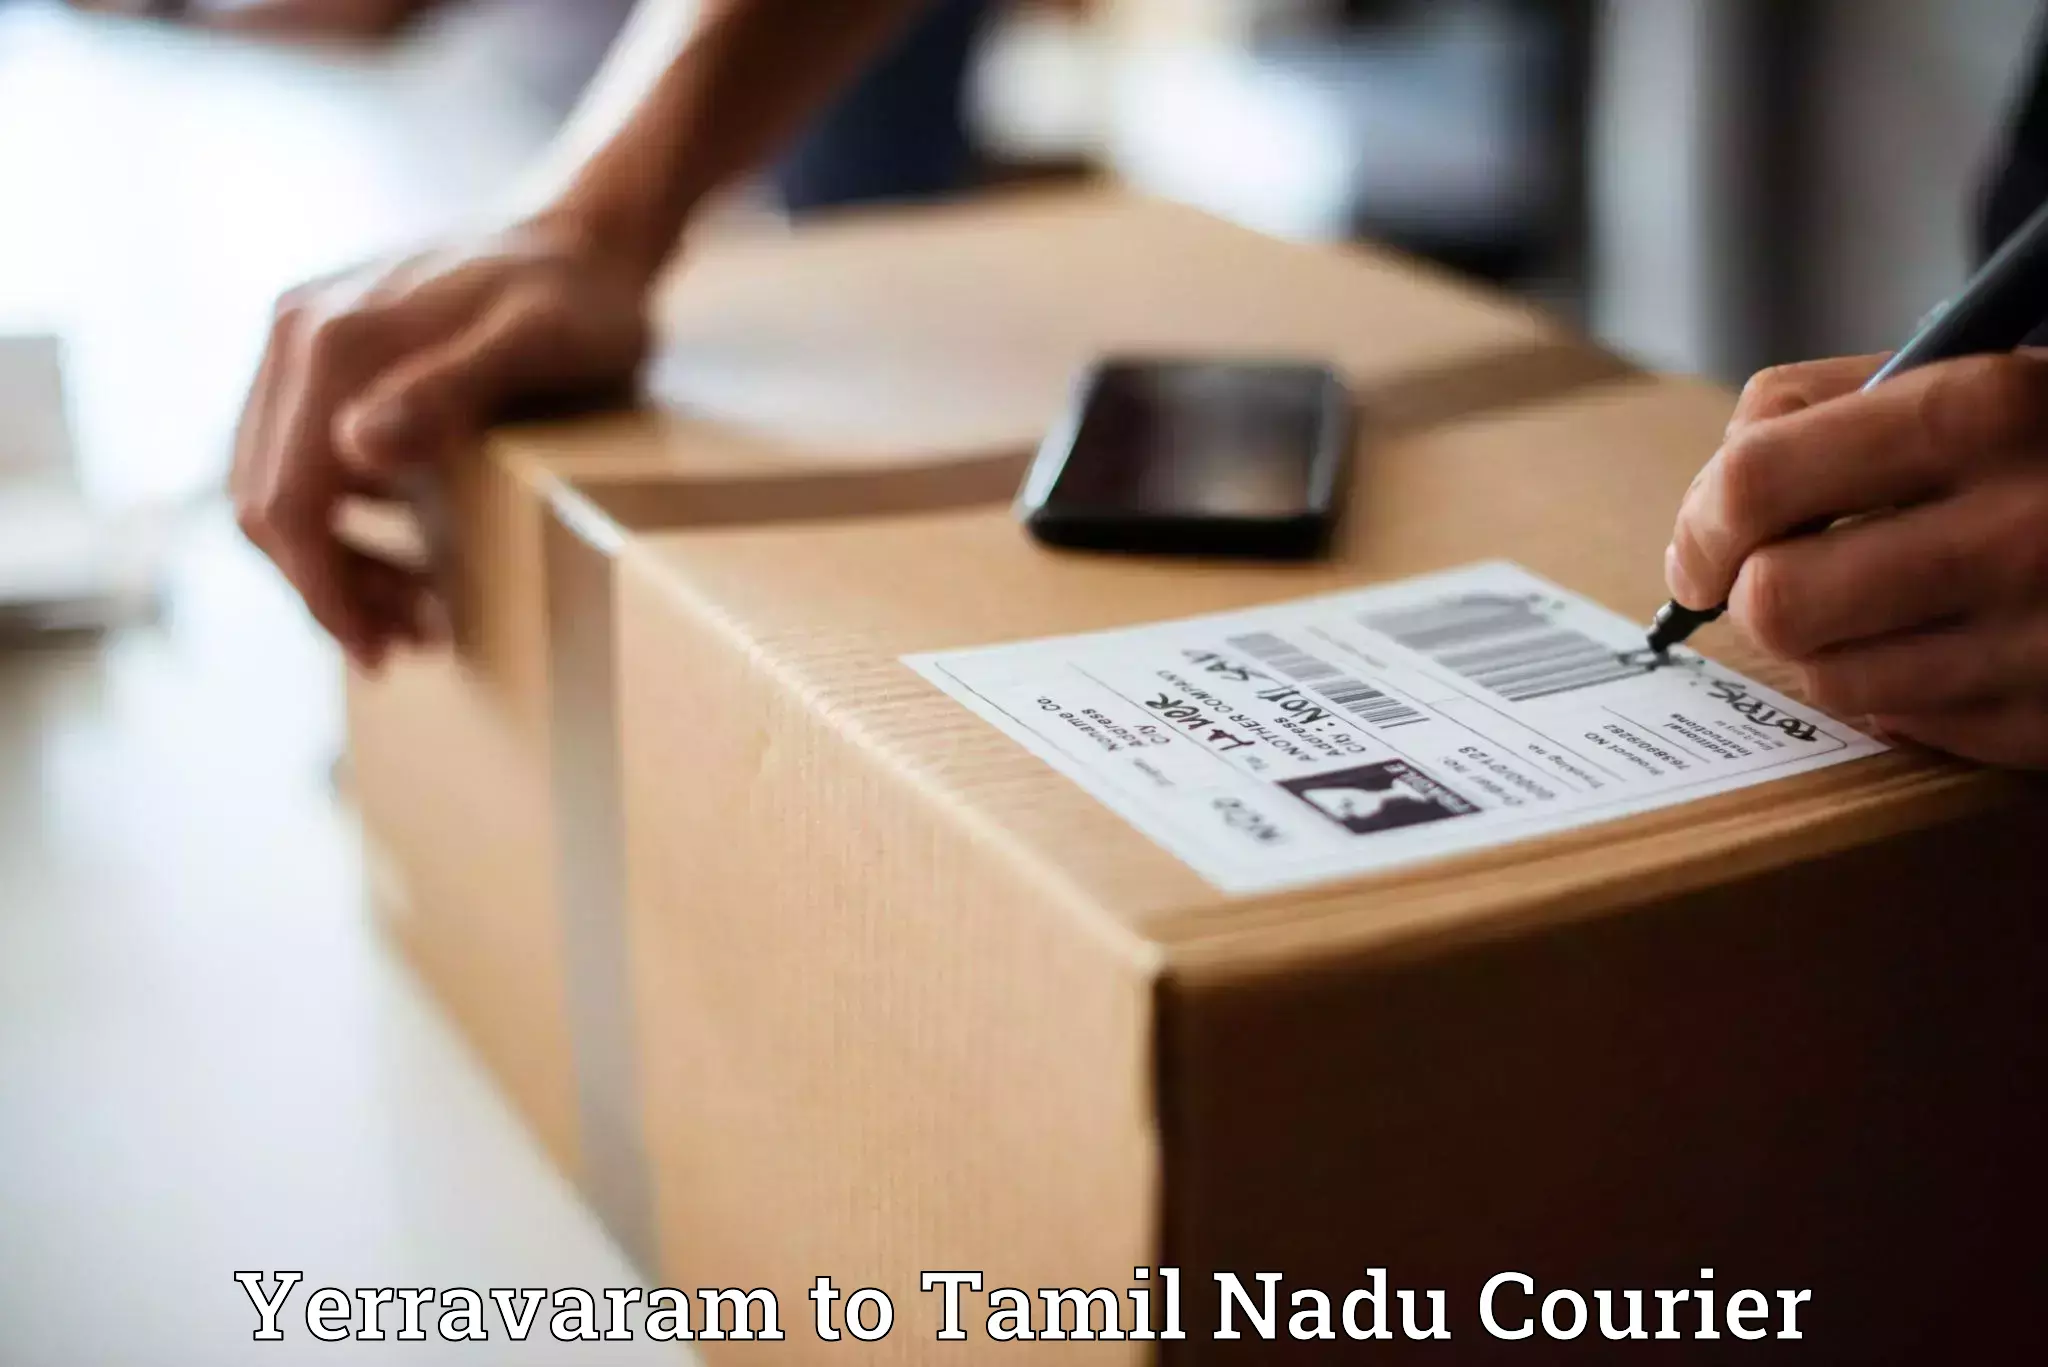 Bulk courier orders Yerravaram to Tamil Nadu